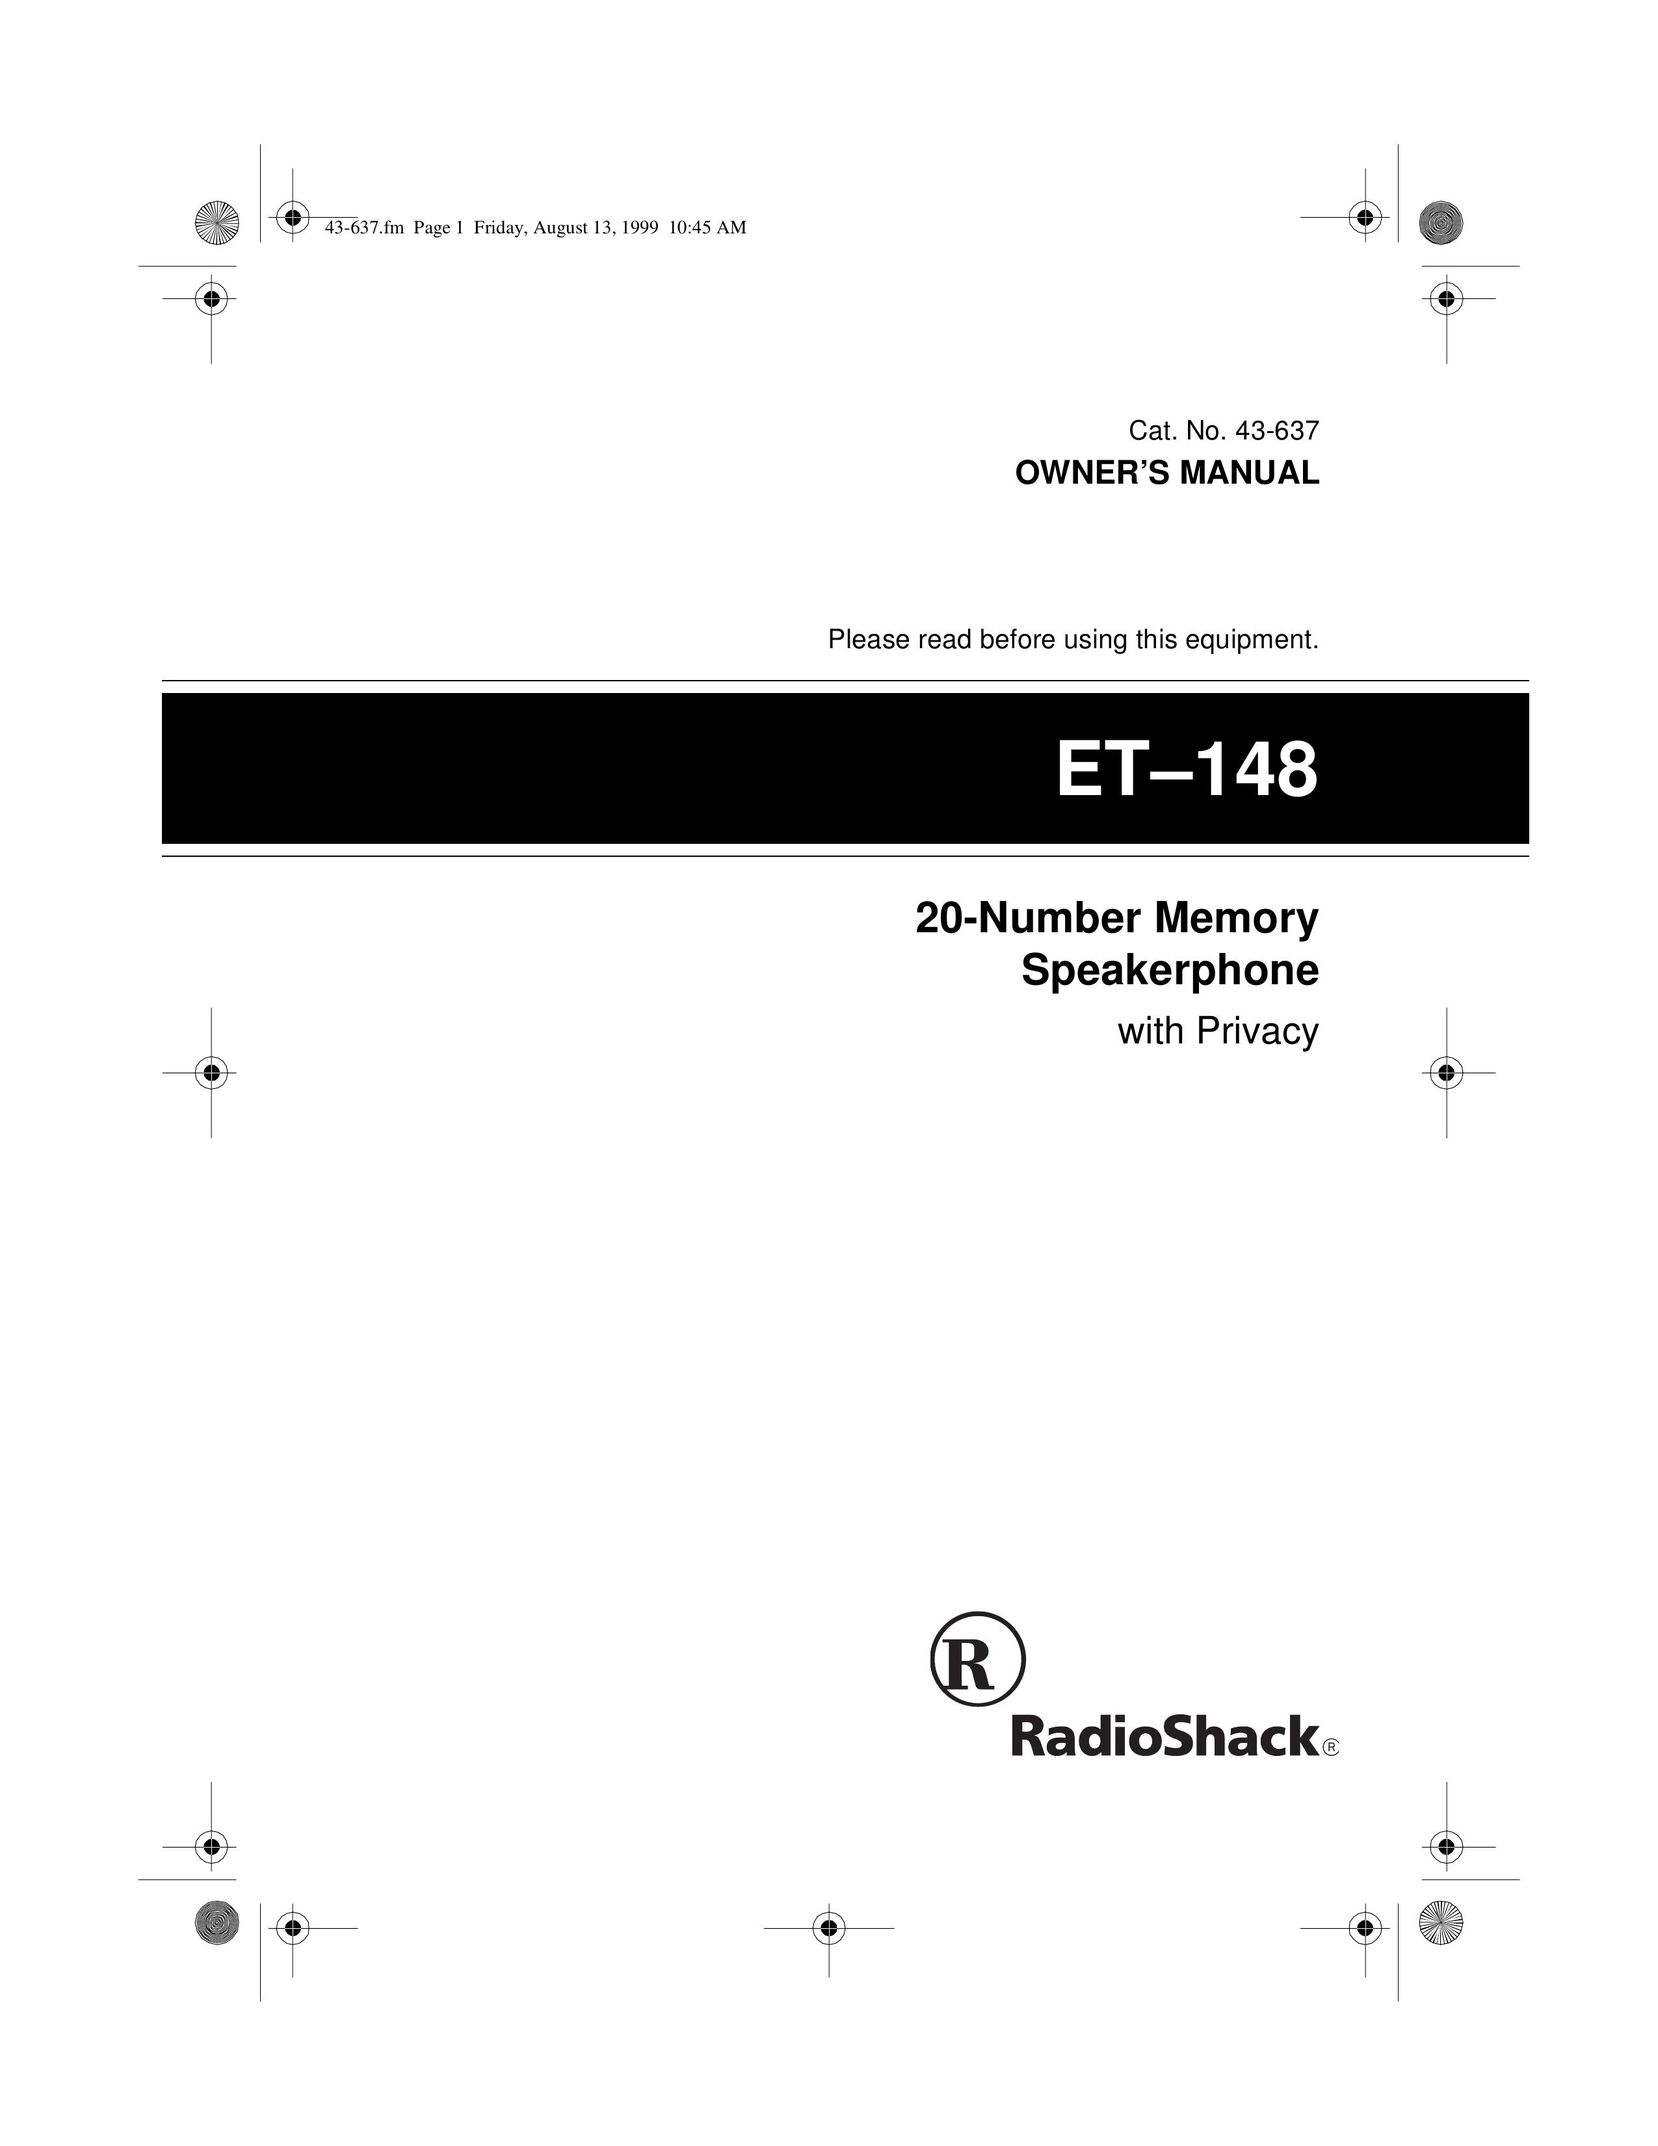 Radio Shack ET-148 Conference Phone User Manual